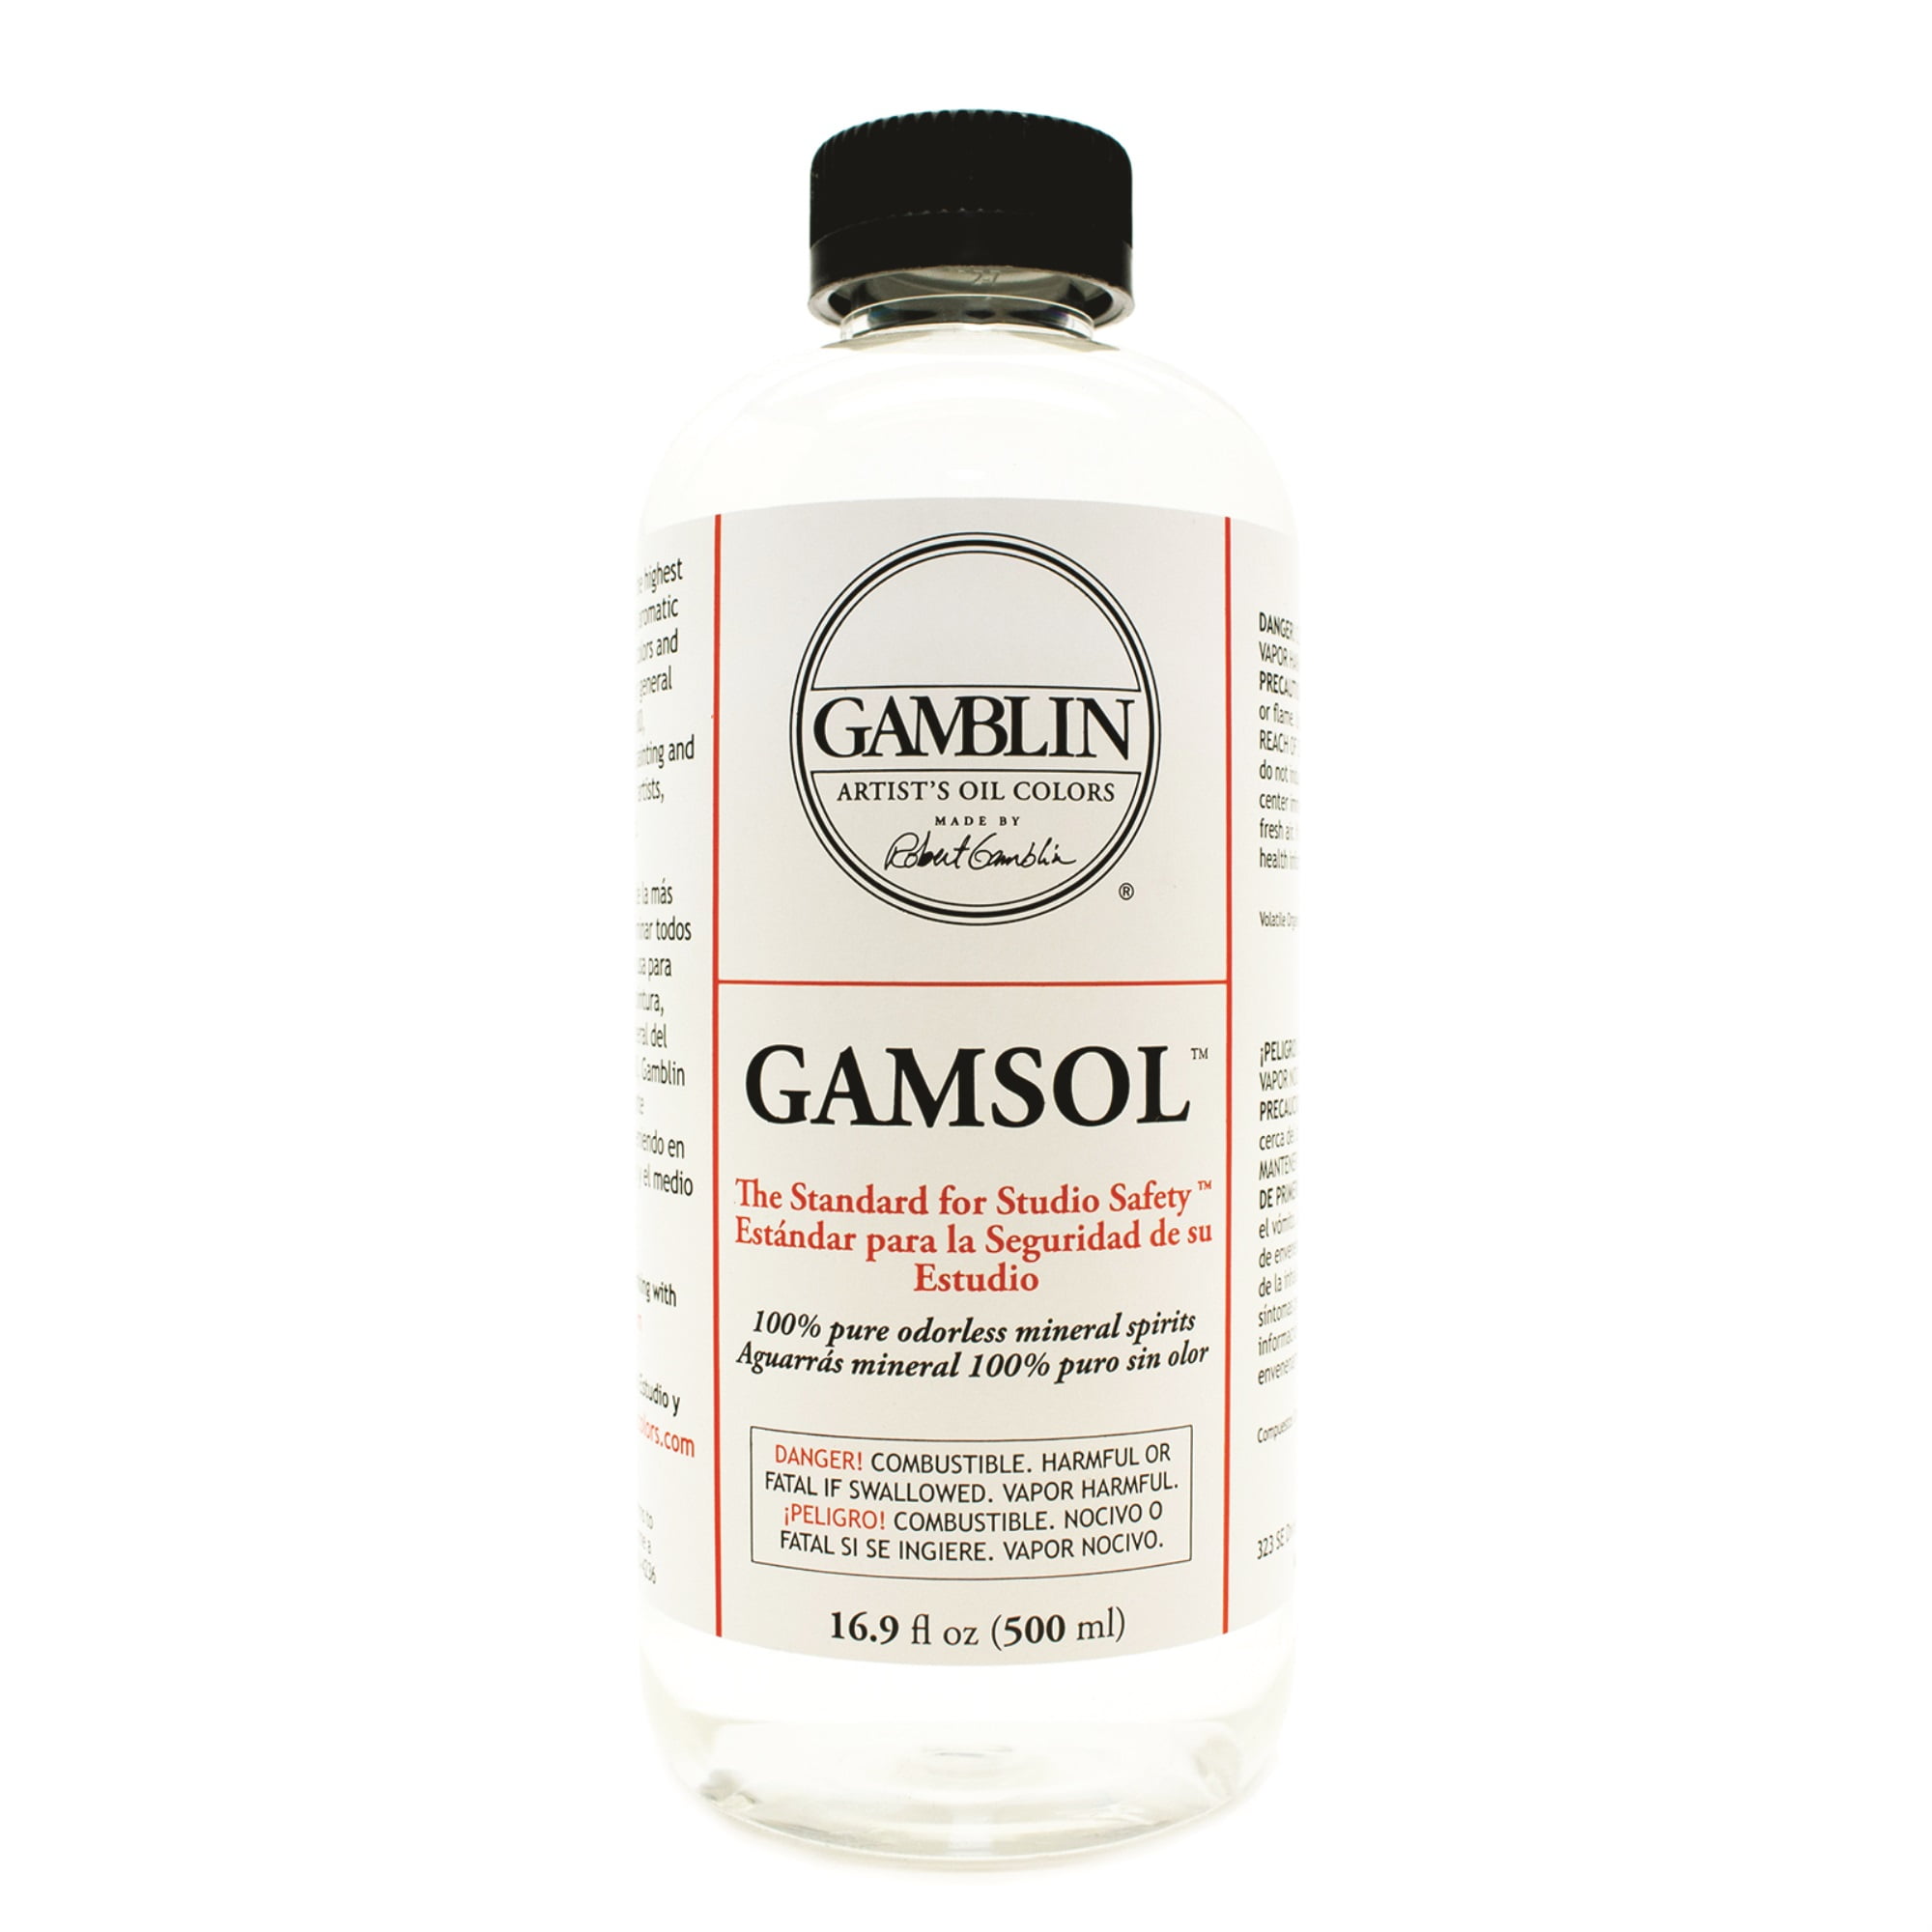 Gamblin G00094 GAMSOL - OMS 4oz